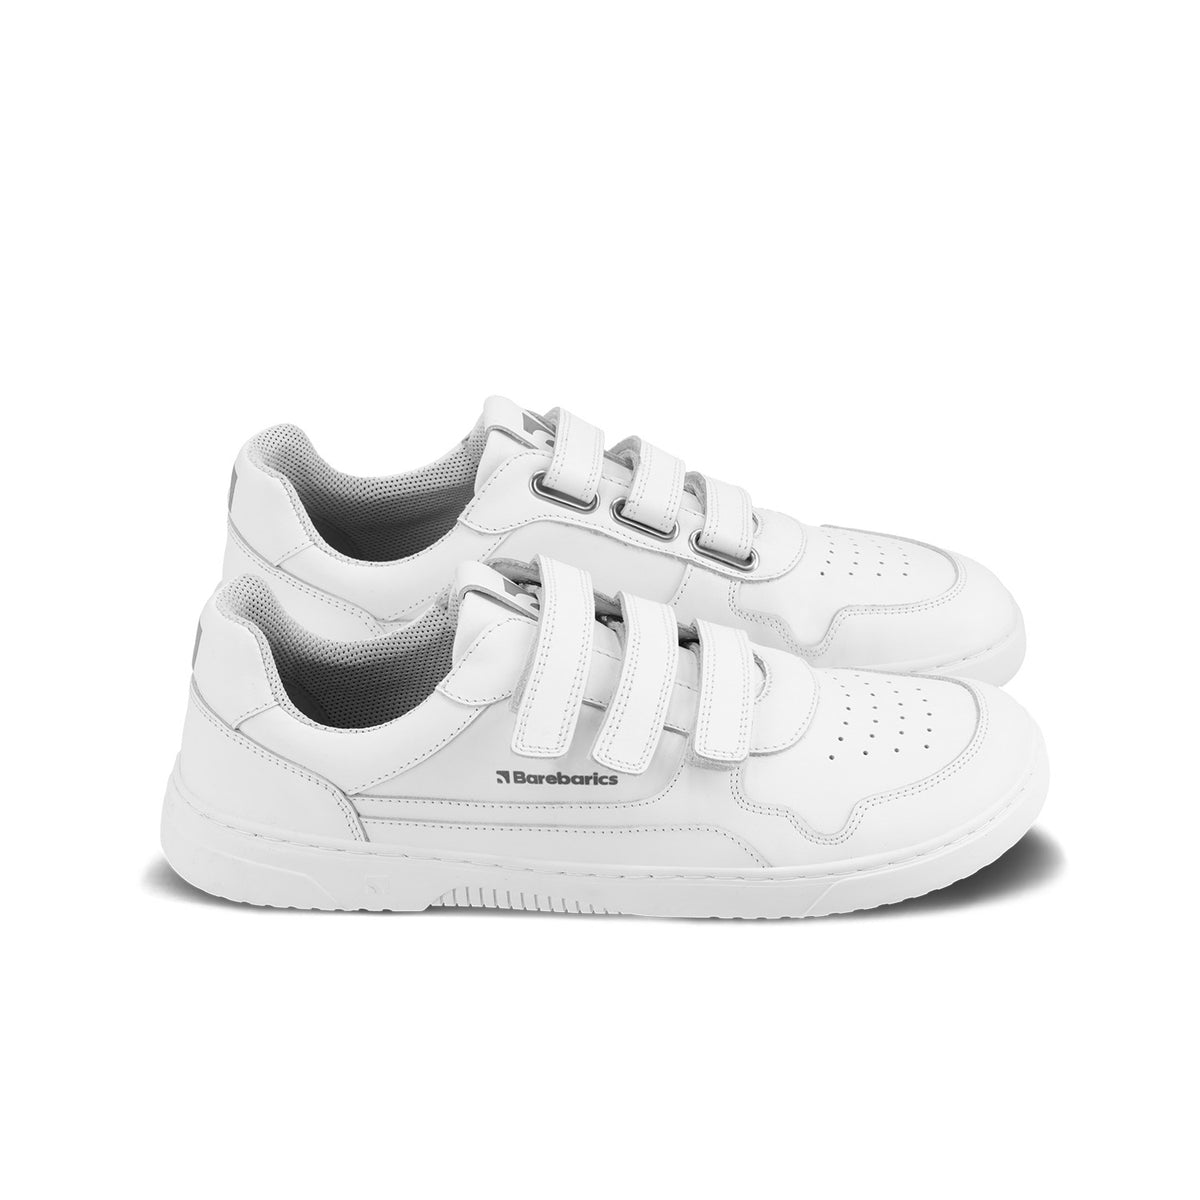 Barefoot Sneakers Barebarics Zing Velcro - All White - Leather 3  - OzBarefoot